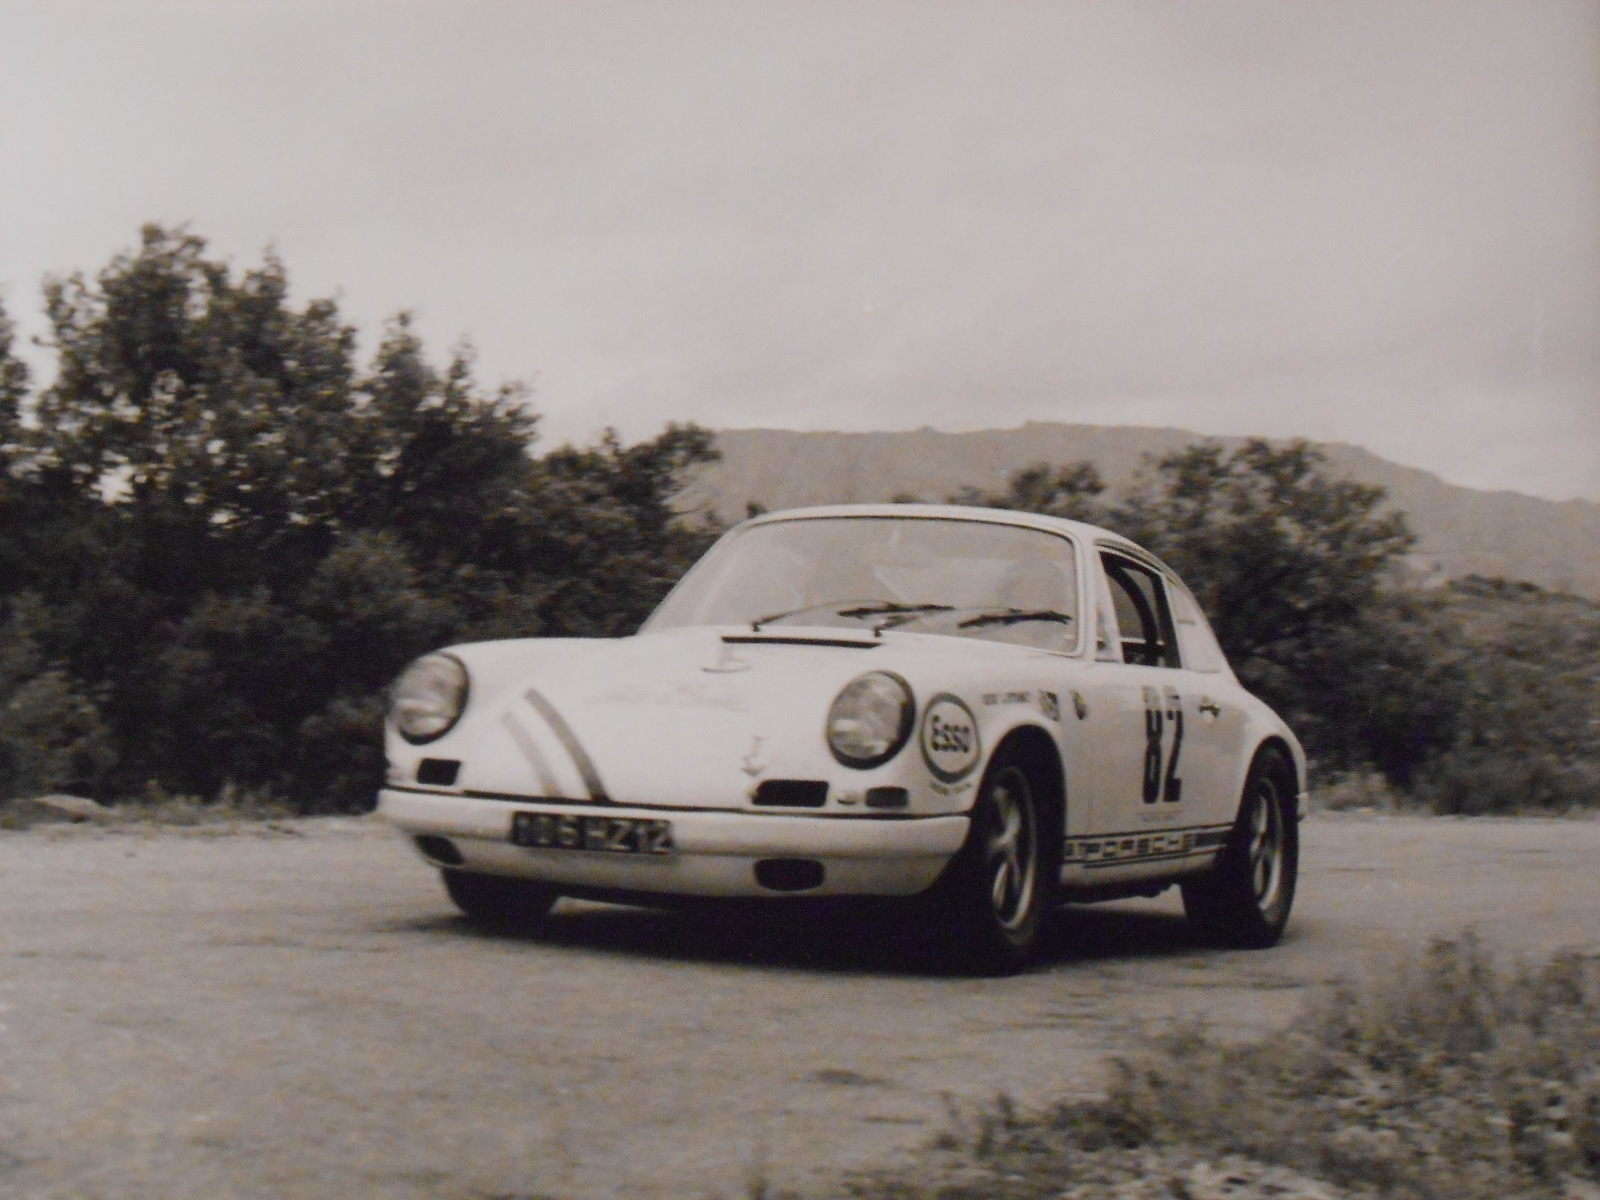 11899016R at Rallye de lHrault 1970